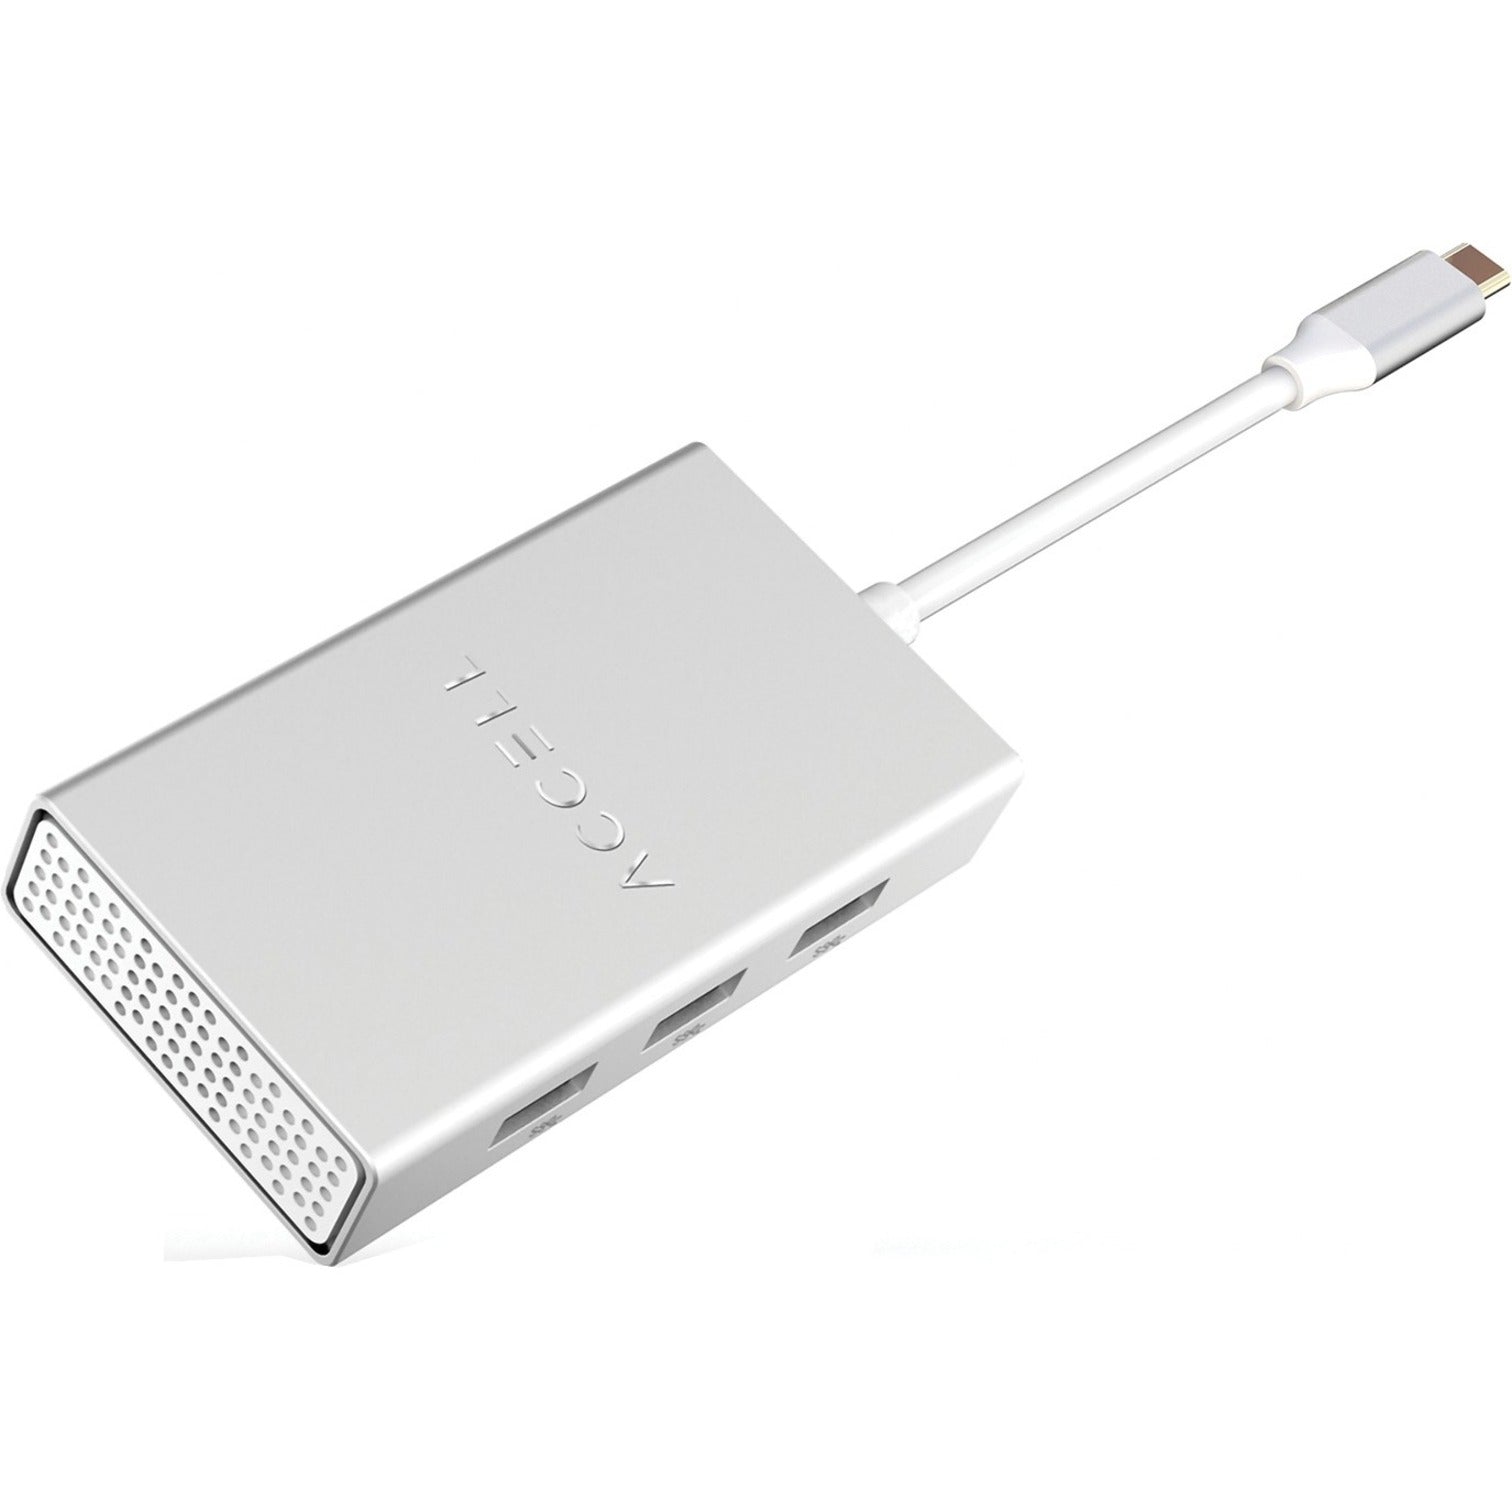 Accell U240B-002K Air USB-C 4K Driver-Less Dock, 2 HDMI Outputs, 4 USB Ports, 87W Power Supply